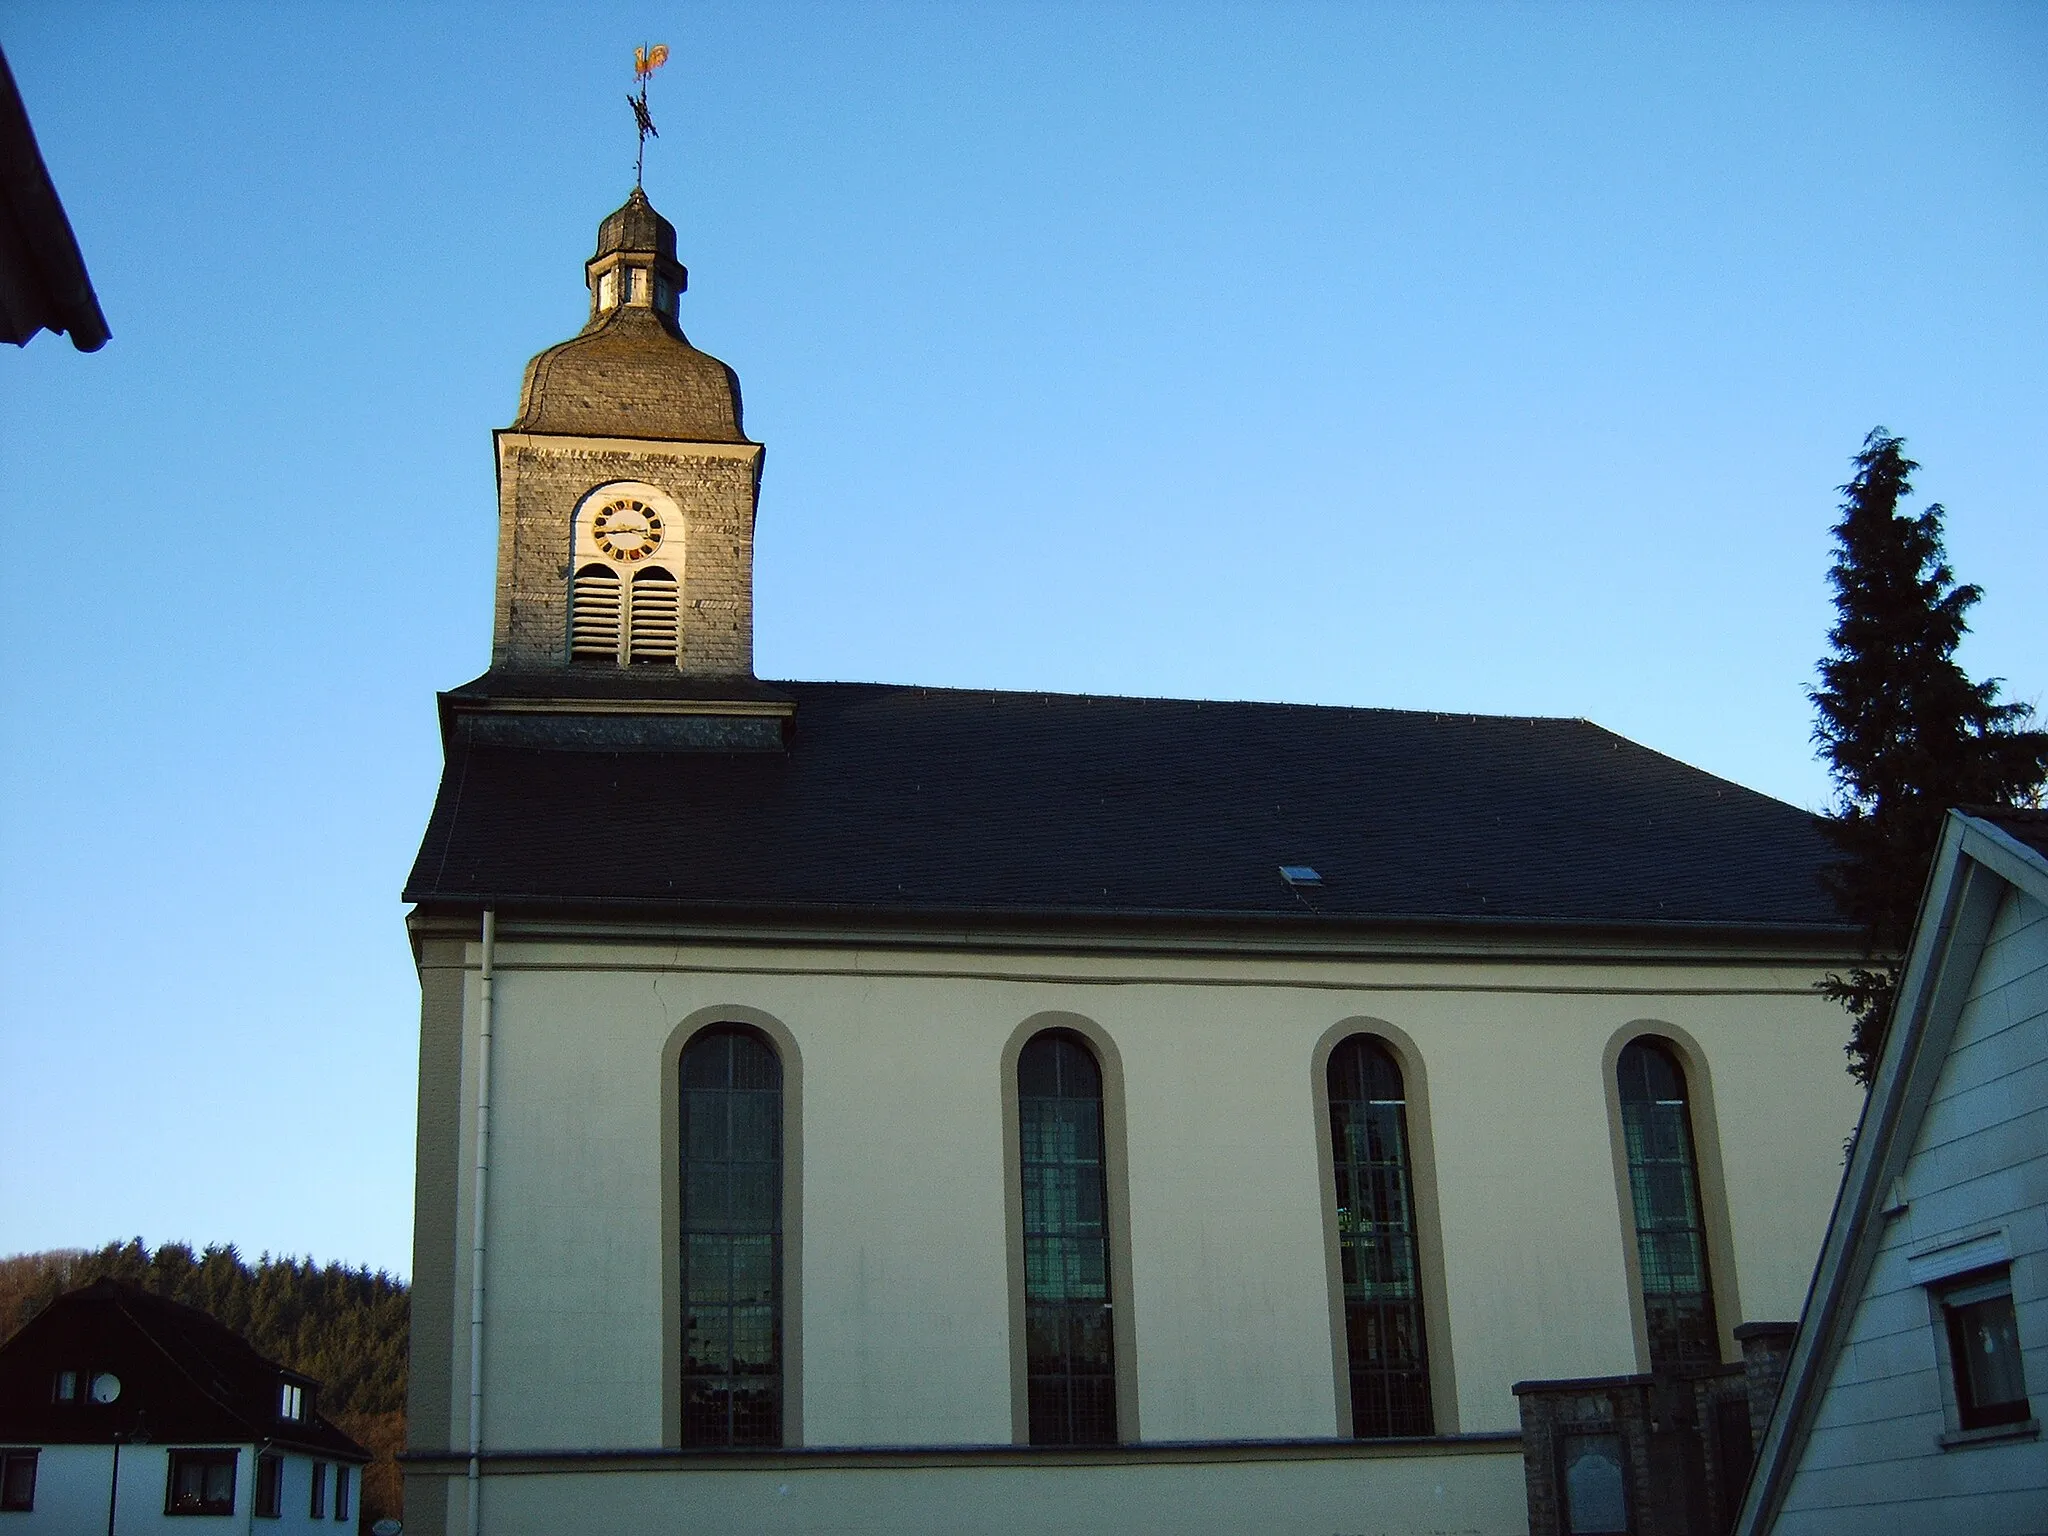 Photo showing: Description: Protestantic church in Niederwörresbach, Germany, build 19th century

Source: Alexander Dreyer
Site views of Niederwörresbach, Germany, Photographed by myself, dec. 2005